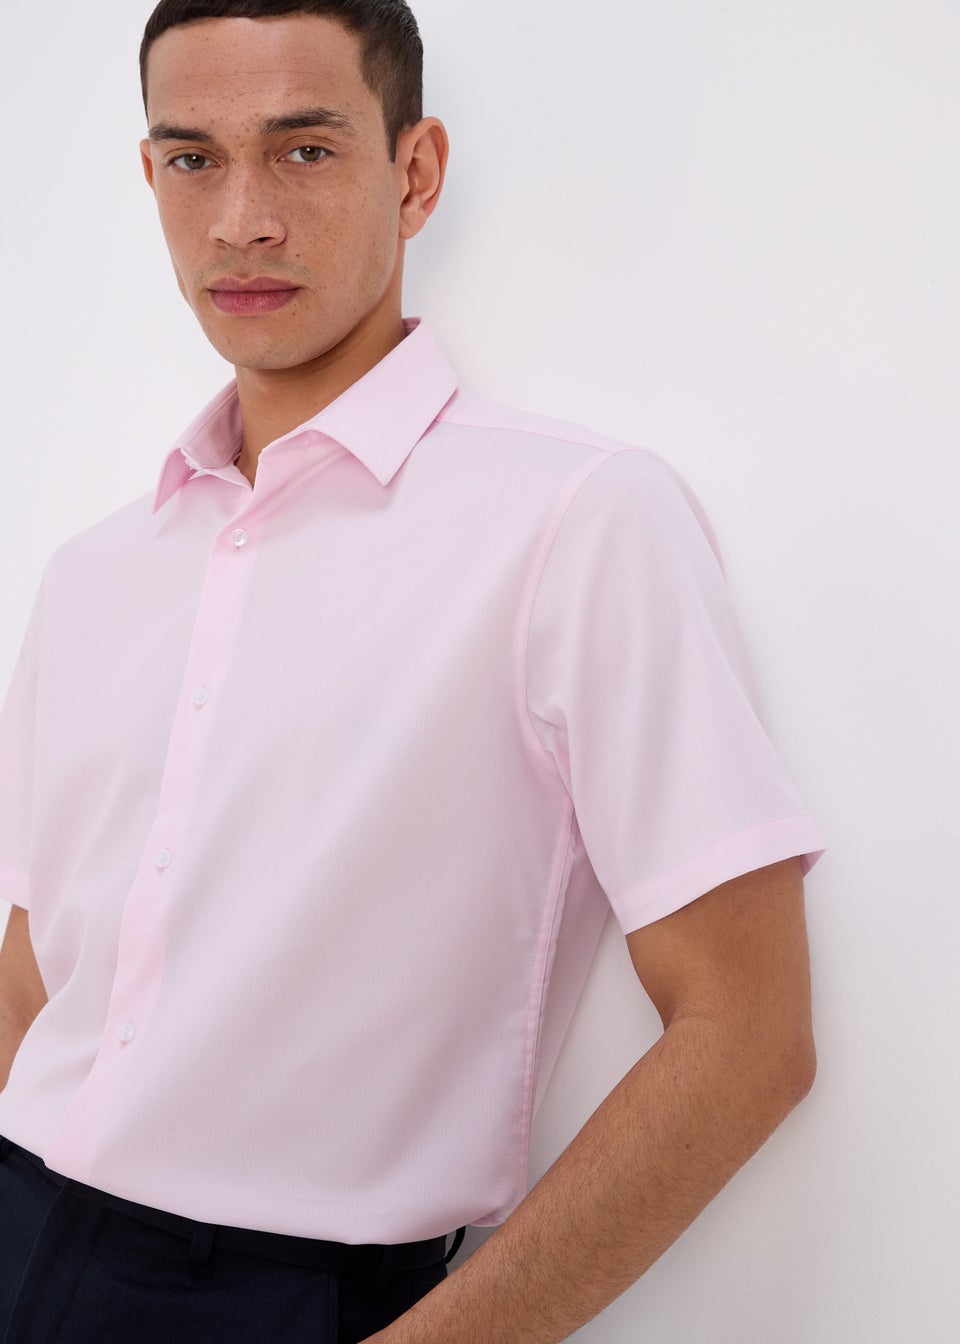 Taylor & Wright Pink Textured Shirt